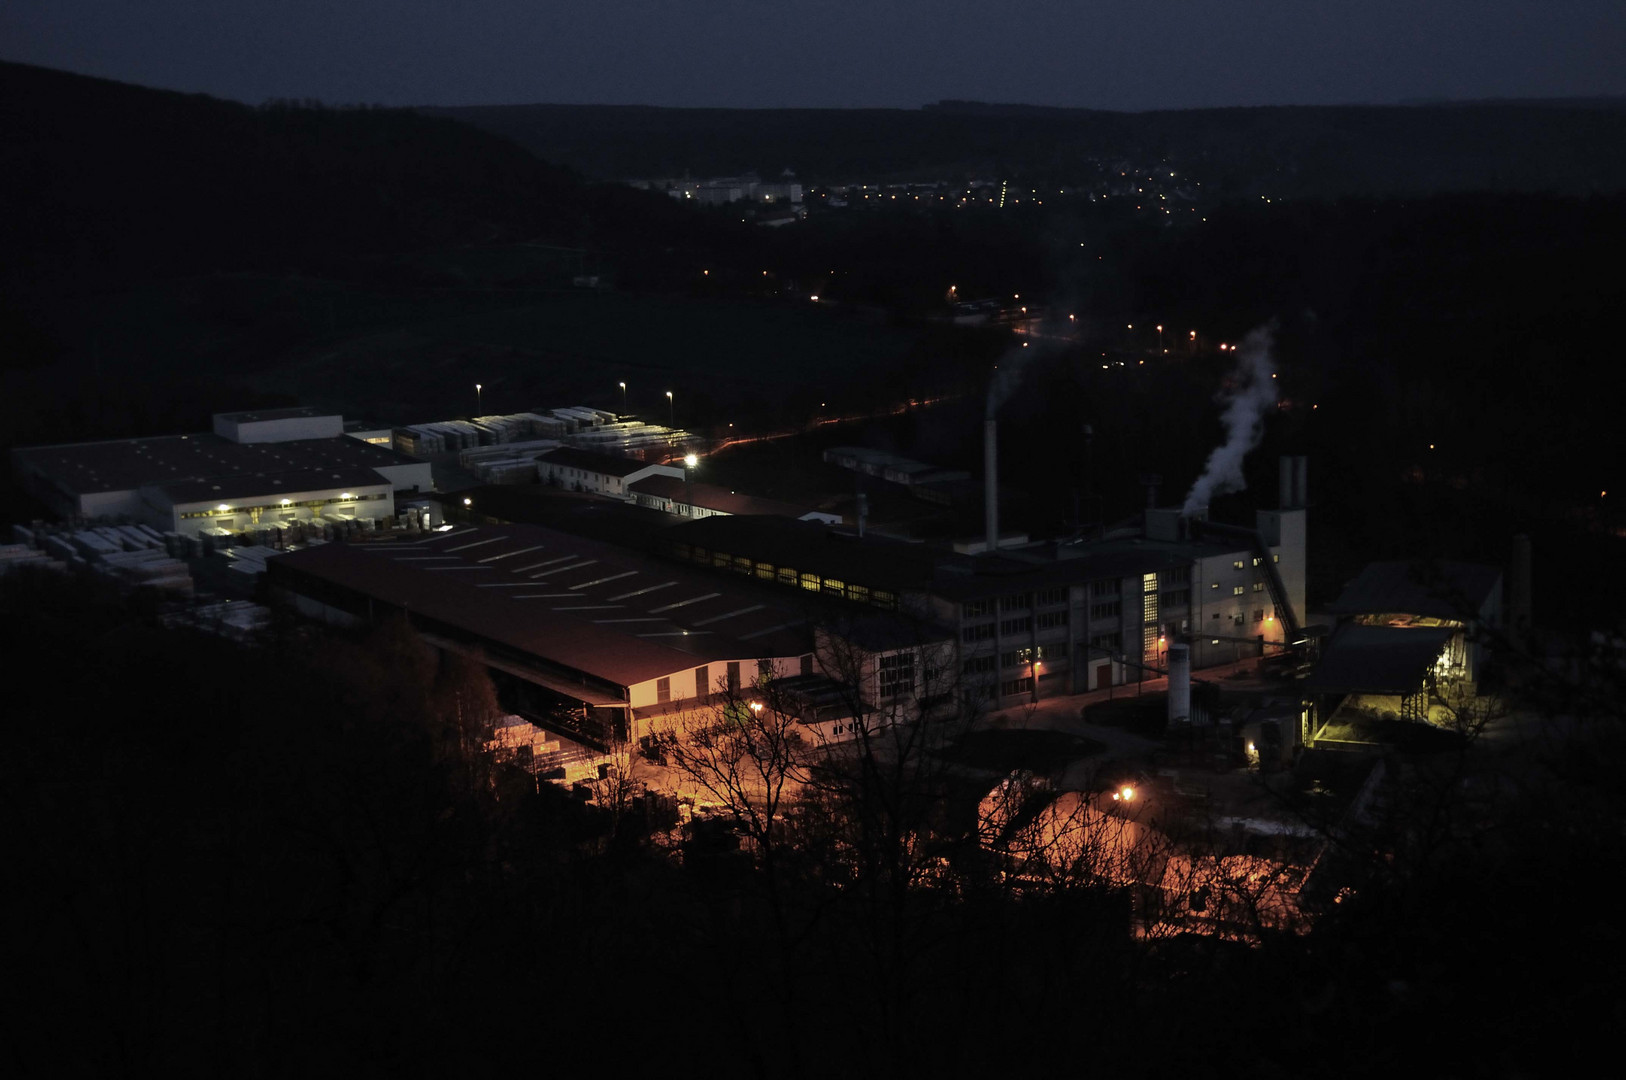 Nachtfabrik